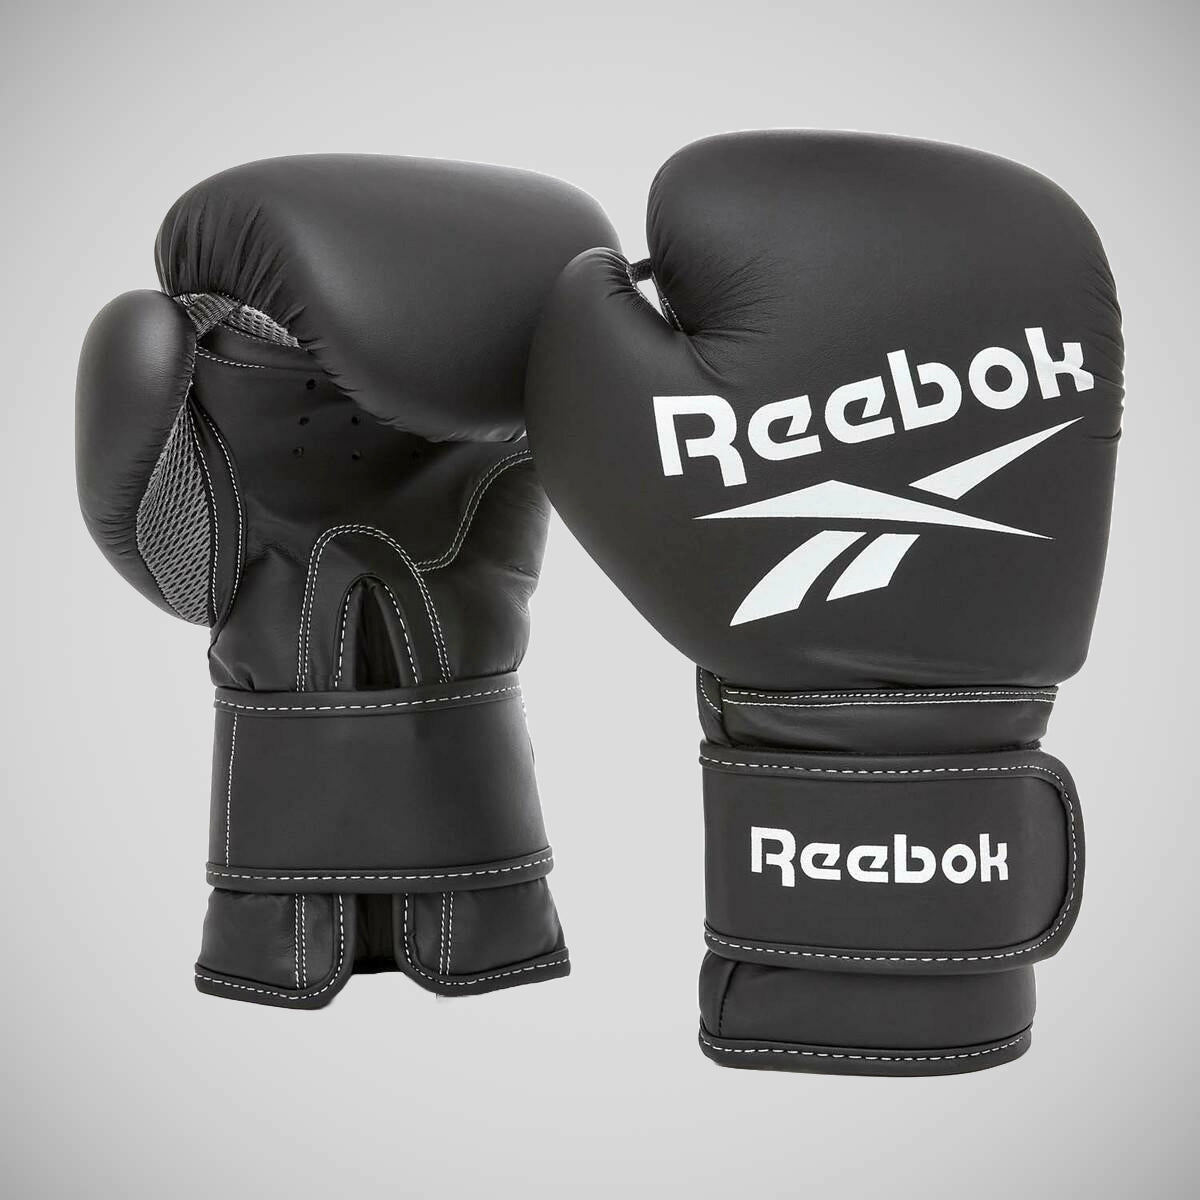 Reebok 3ft Punch Bag and Boxing Gloves Black   